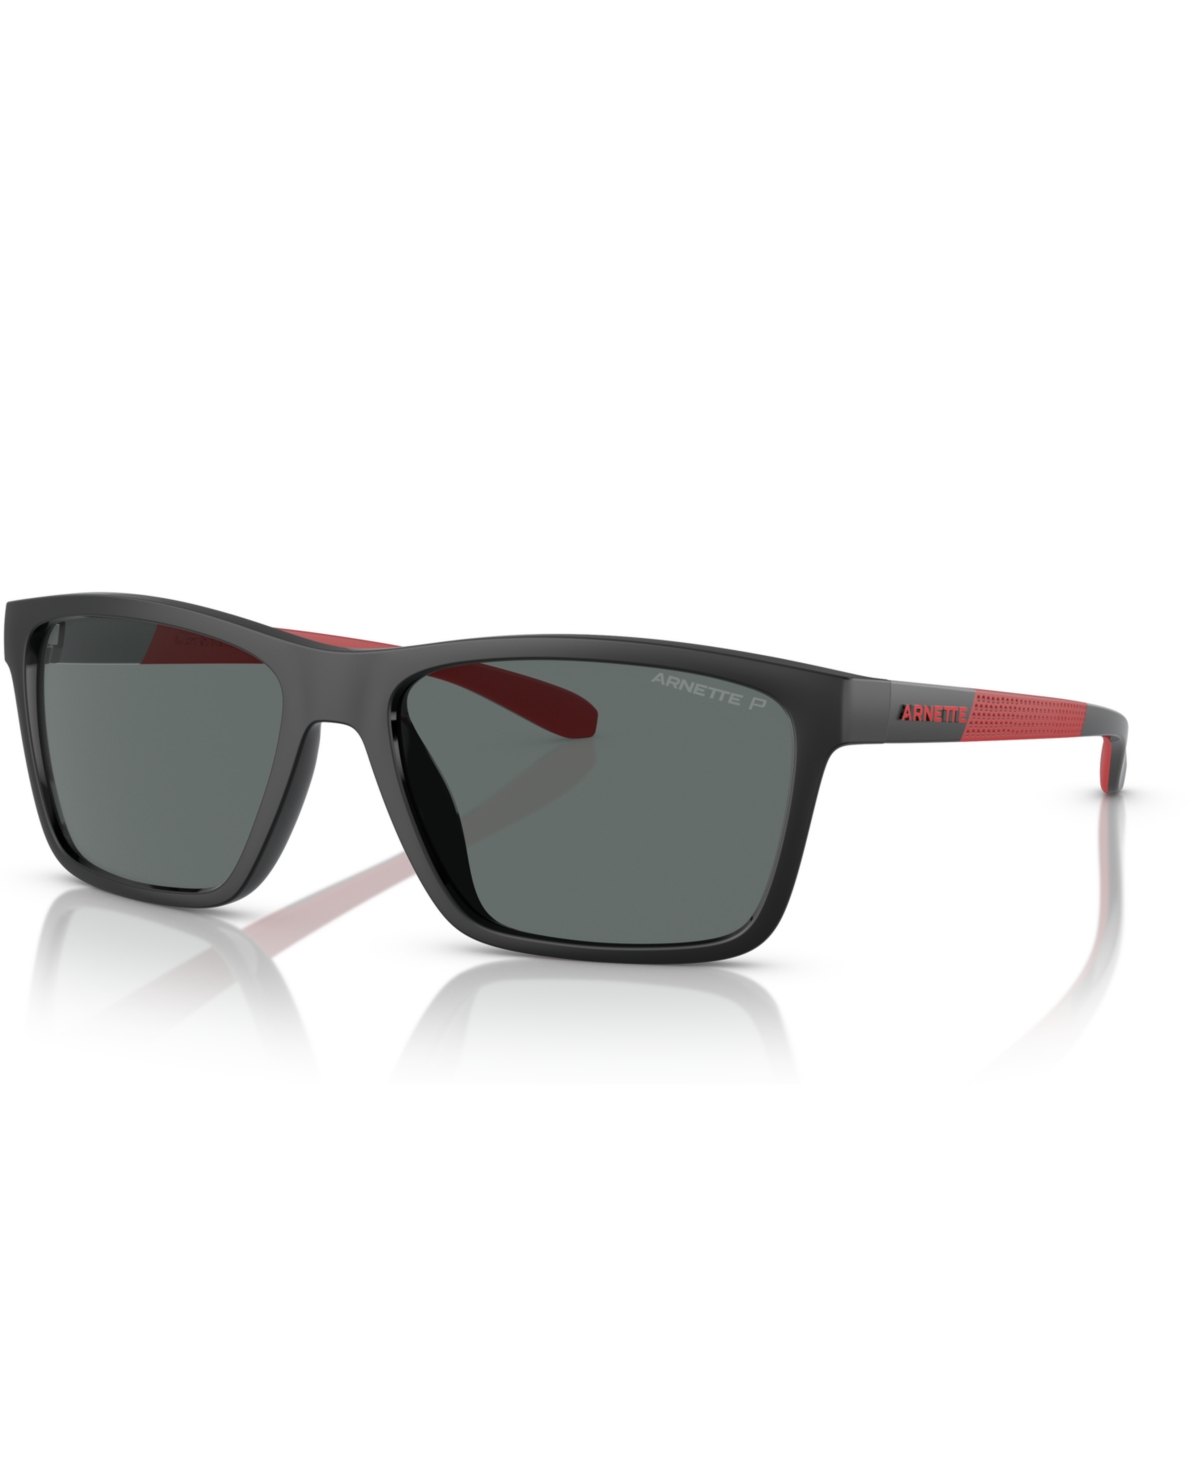 Men's Middlemist Polarized Sunglasses, Polar AN4328U - Black